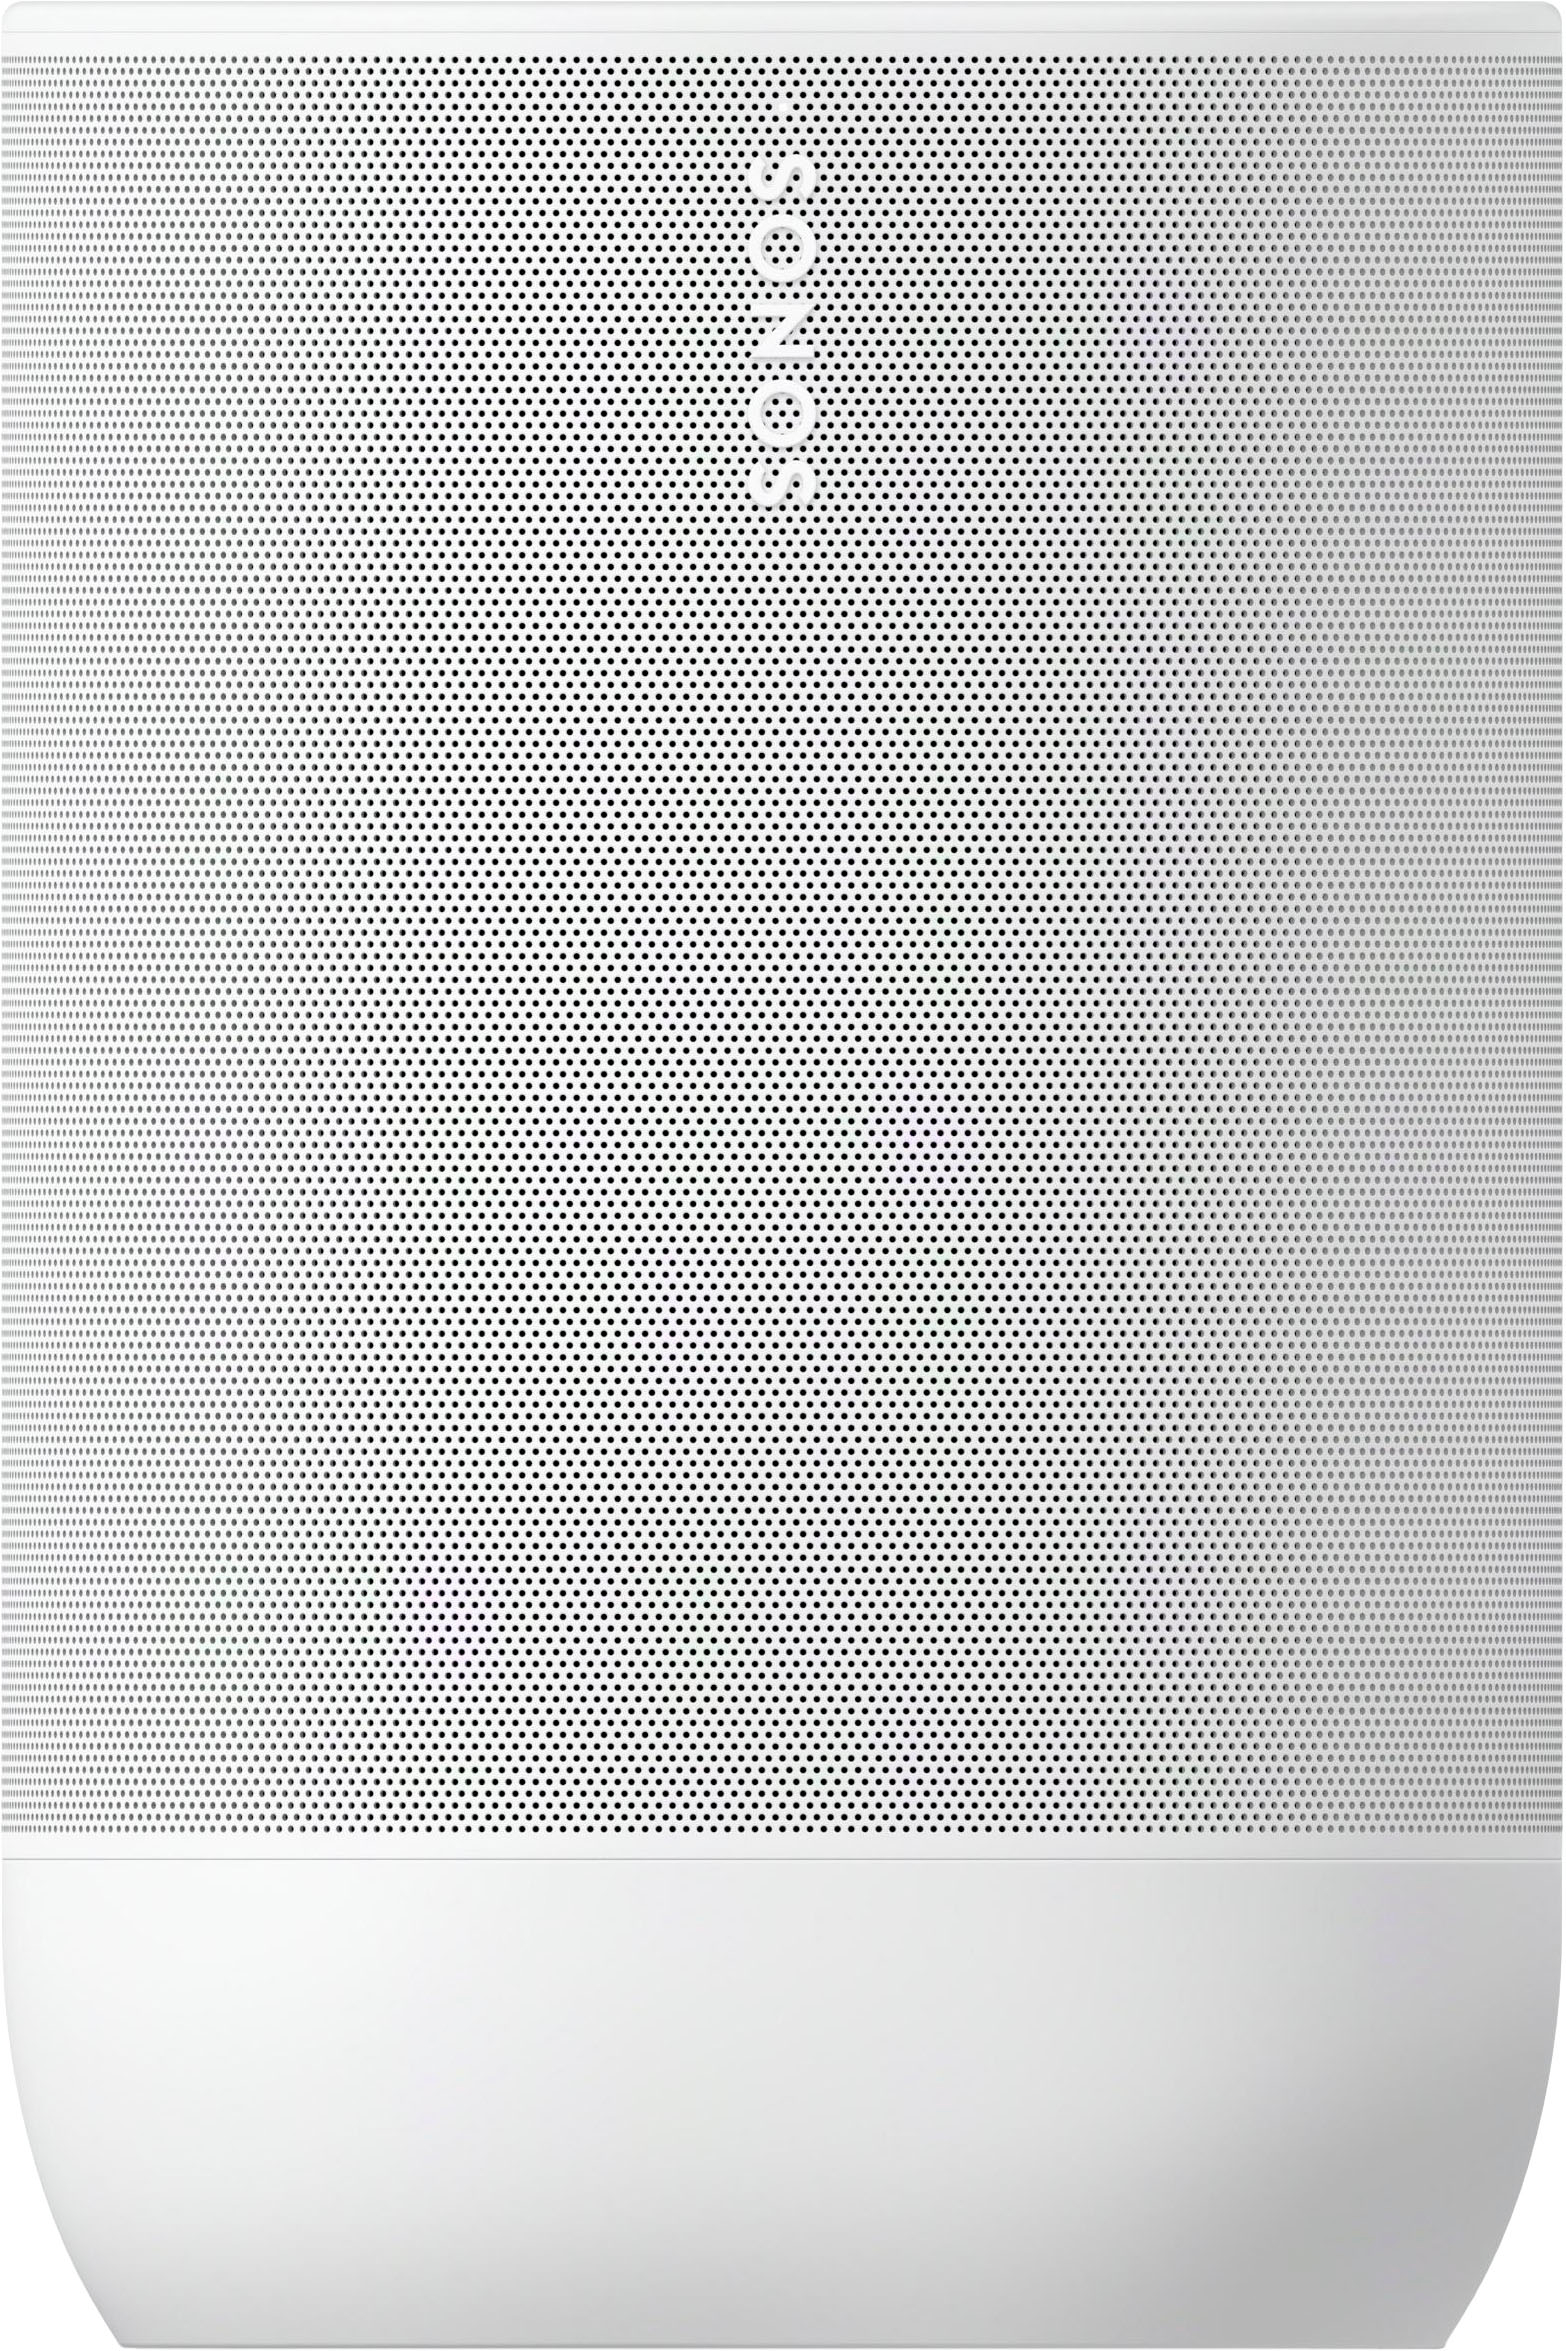 Sonos Move 2 Speaker (Each) White MOVE2US1 - Best Buy